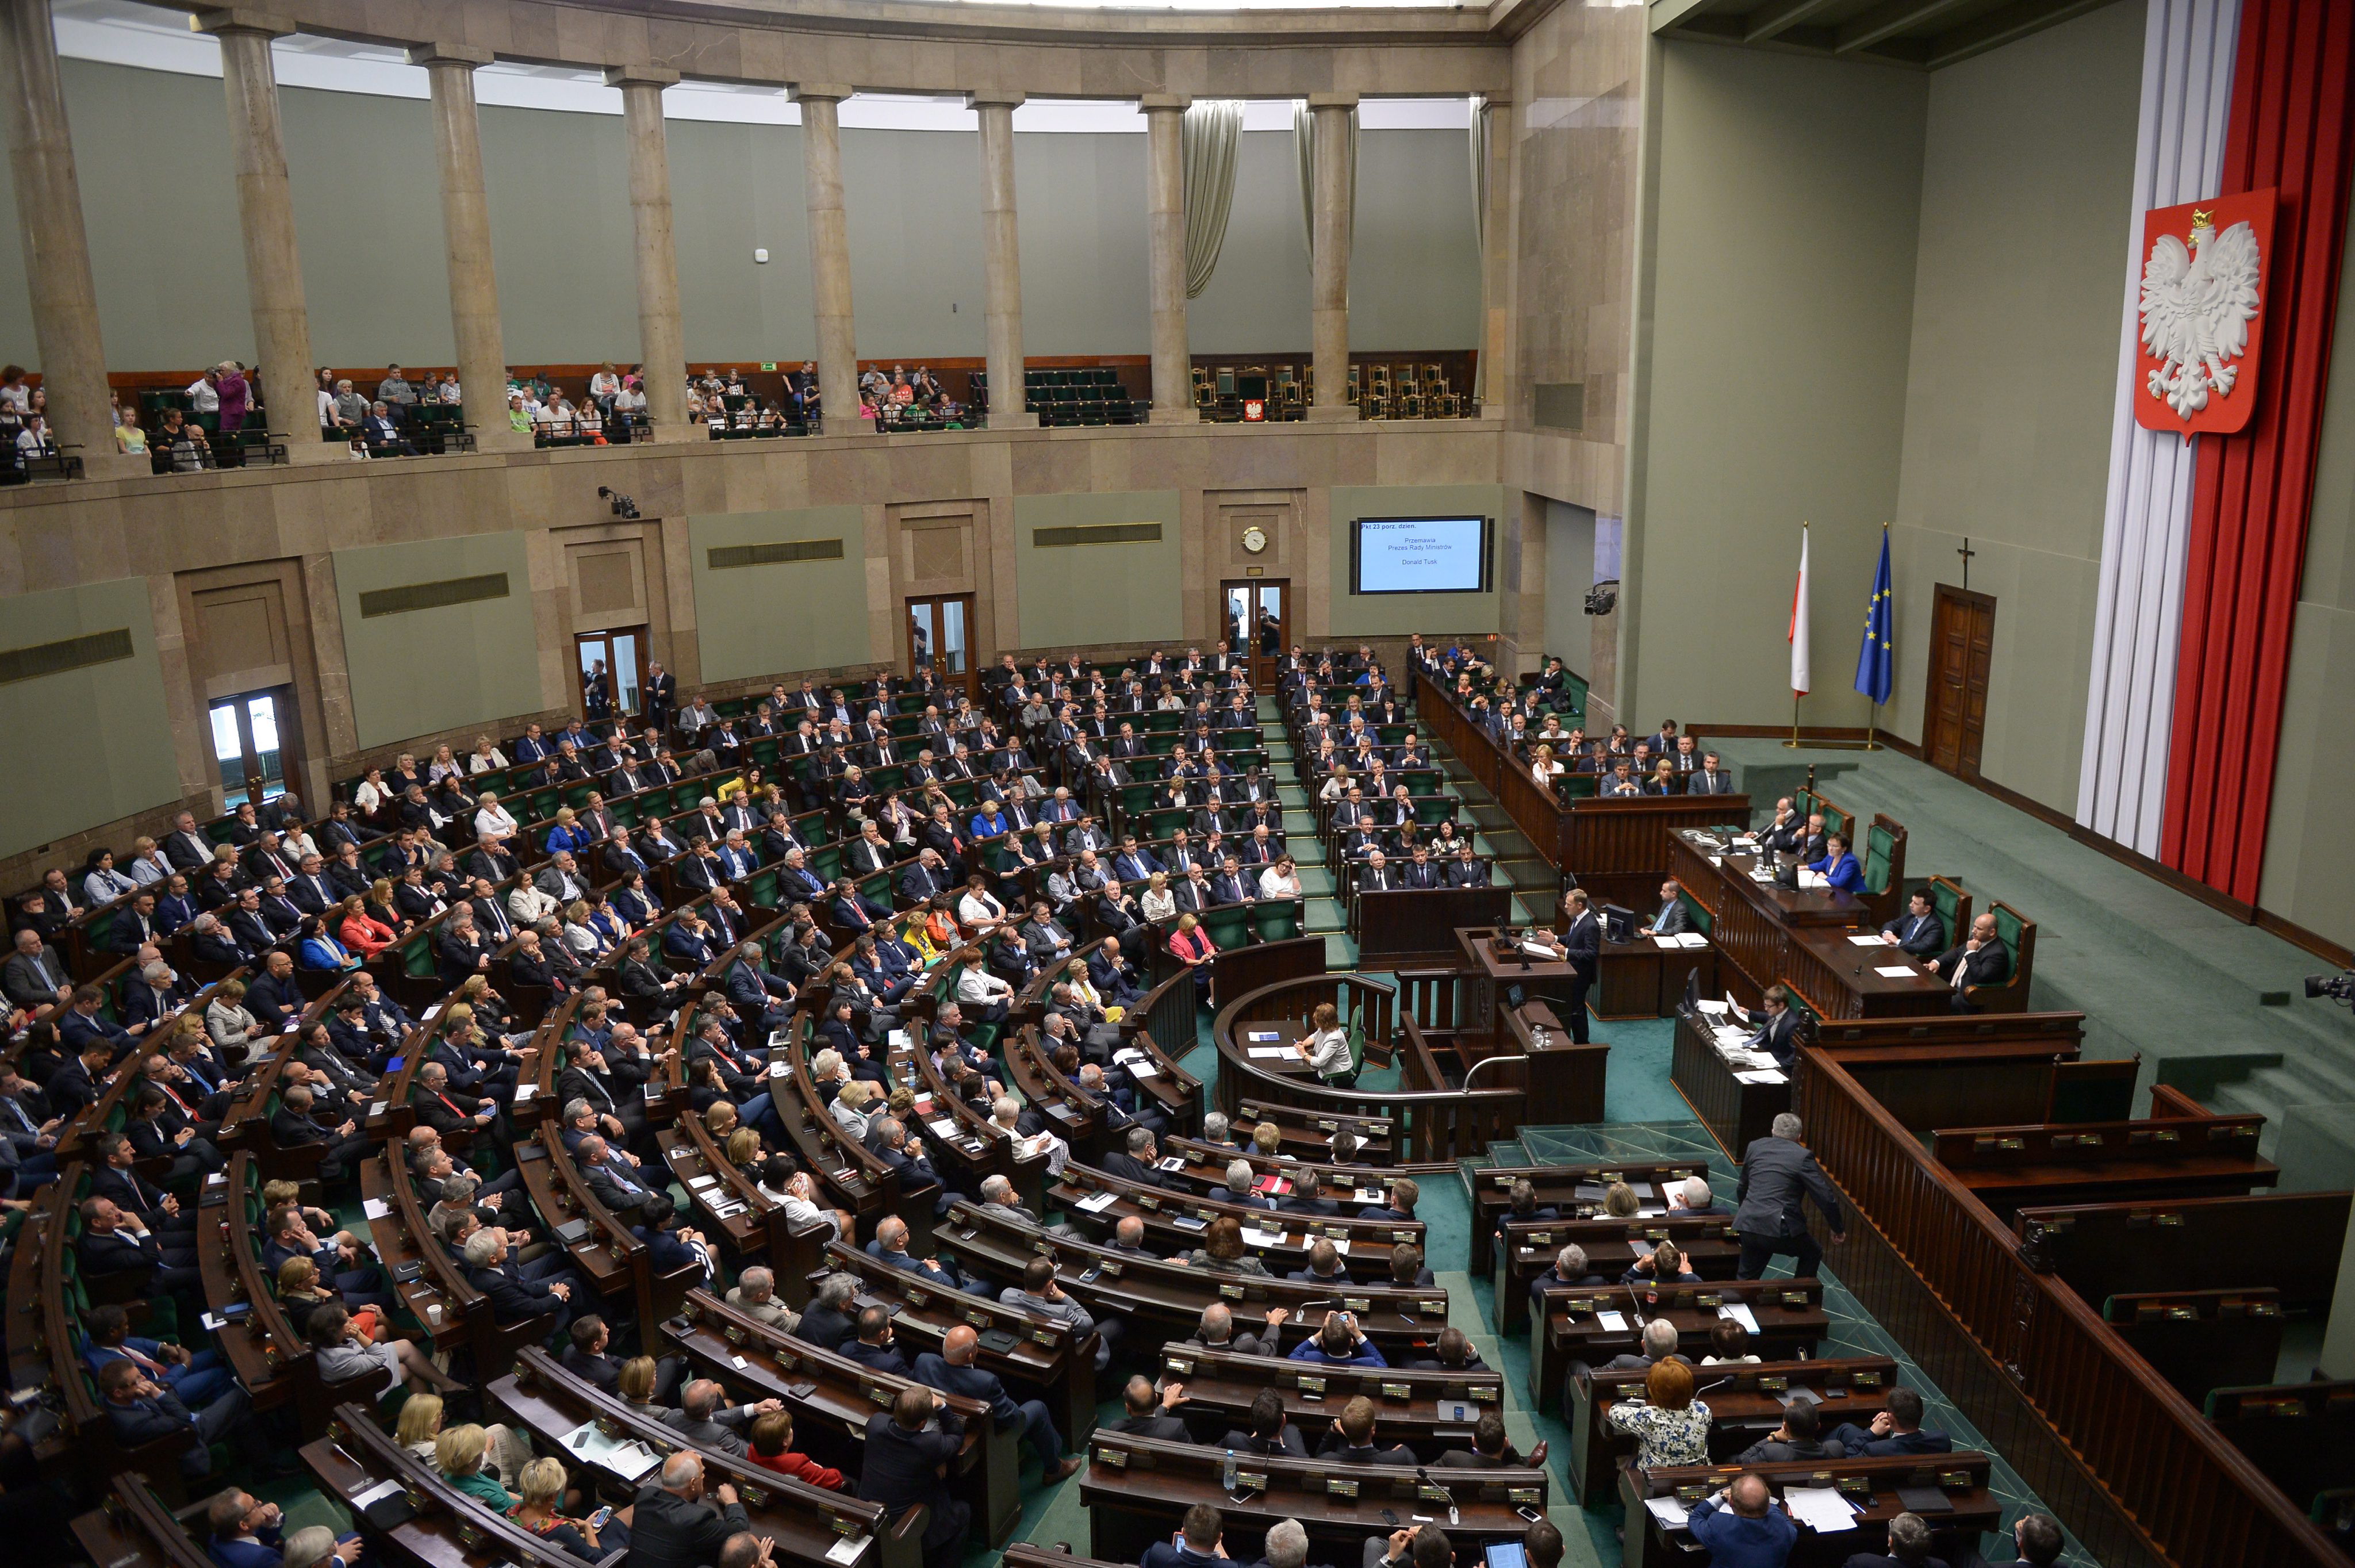 Polnisches Parlament (Sejm) in Warschau | picture alliance / dpa